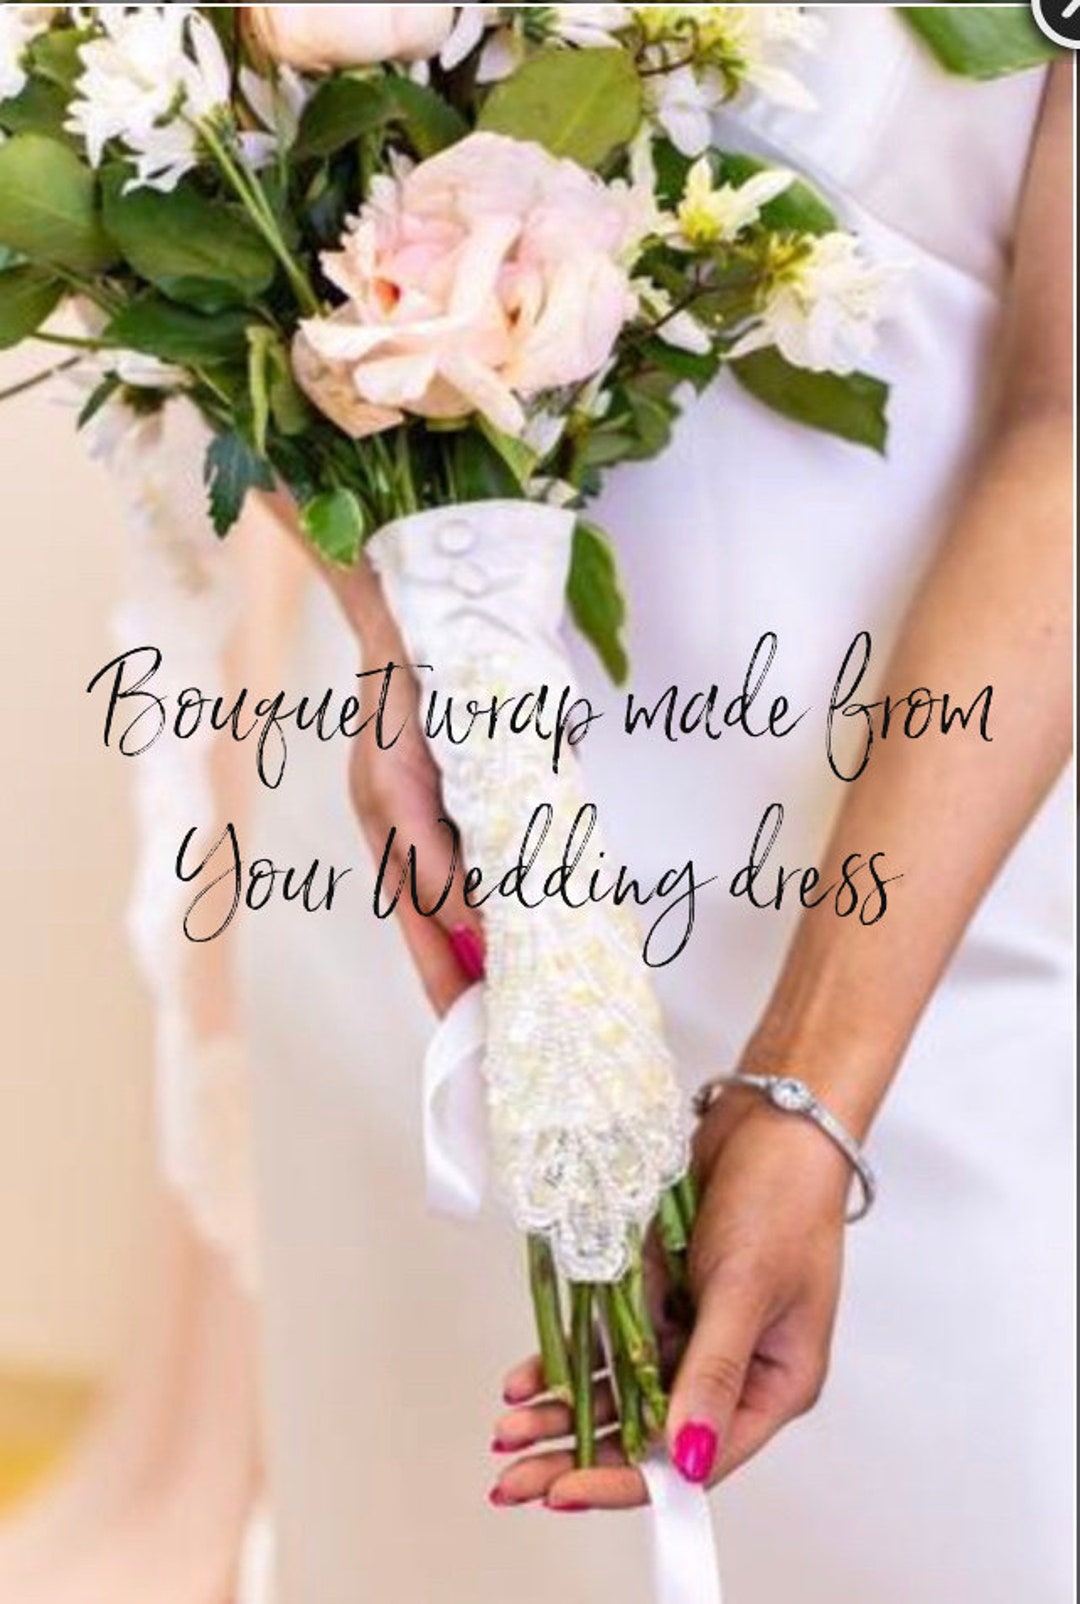 Wedding Bouquet Wrap, Repurposed Wedding Dress, Keepsake Gift for Bride,  Custom Made for Bride 